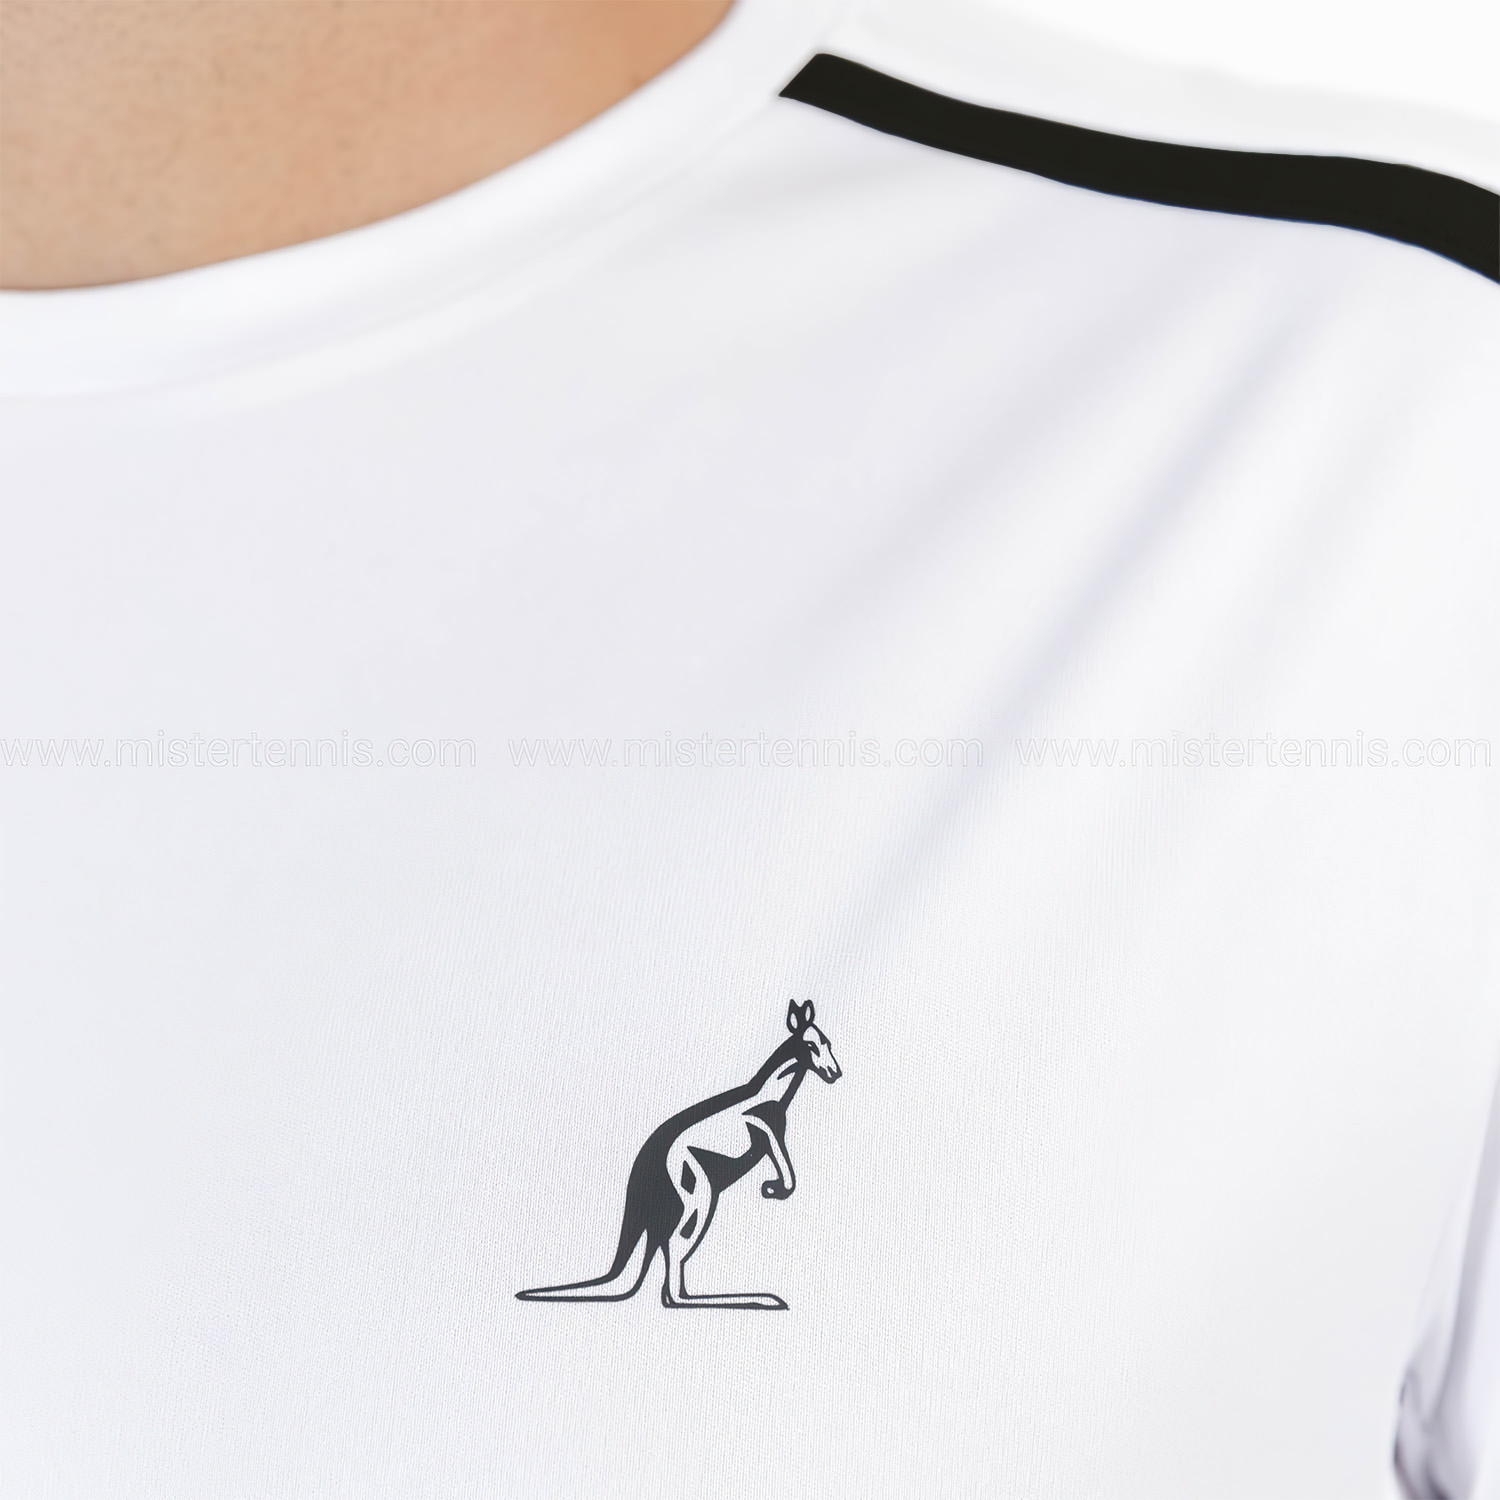 Australian Ace Camiseta - Bianco/Nero